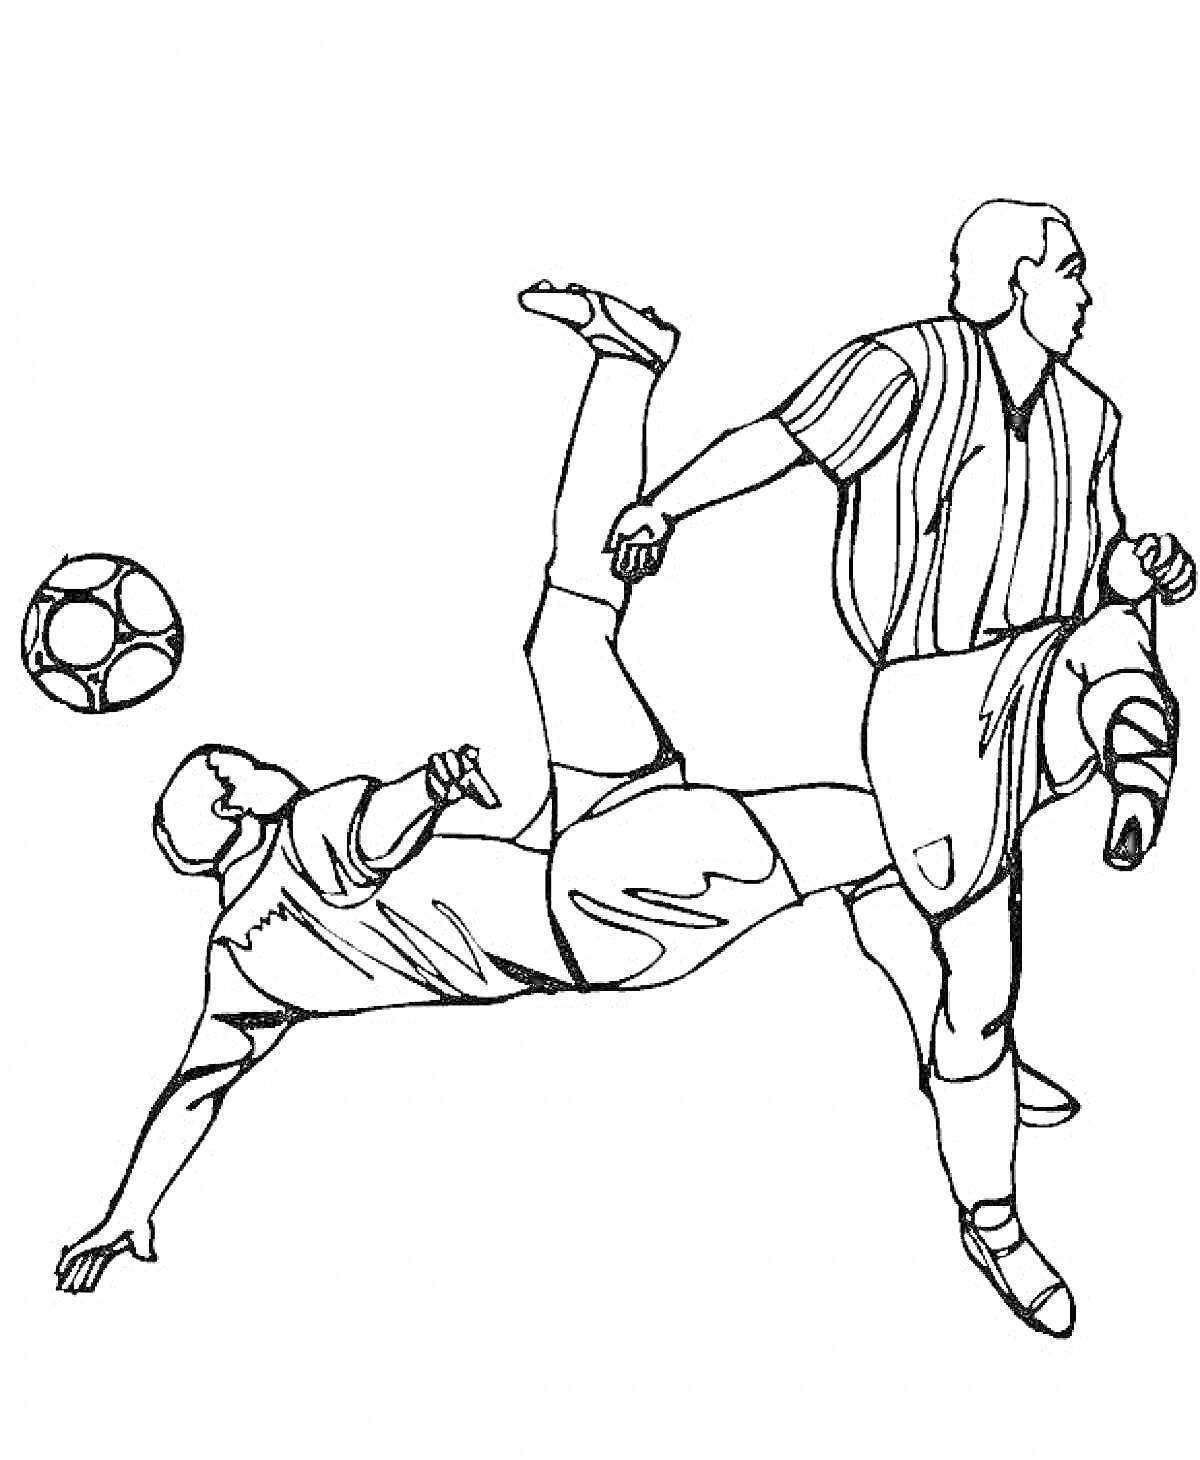 Два футболиста, один исполняет удар через себя, второй борется за мяч